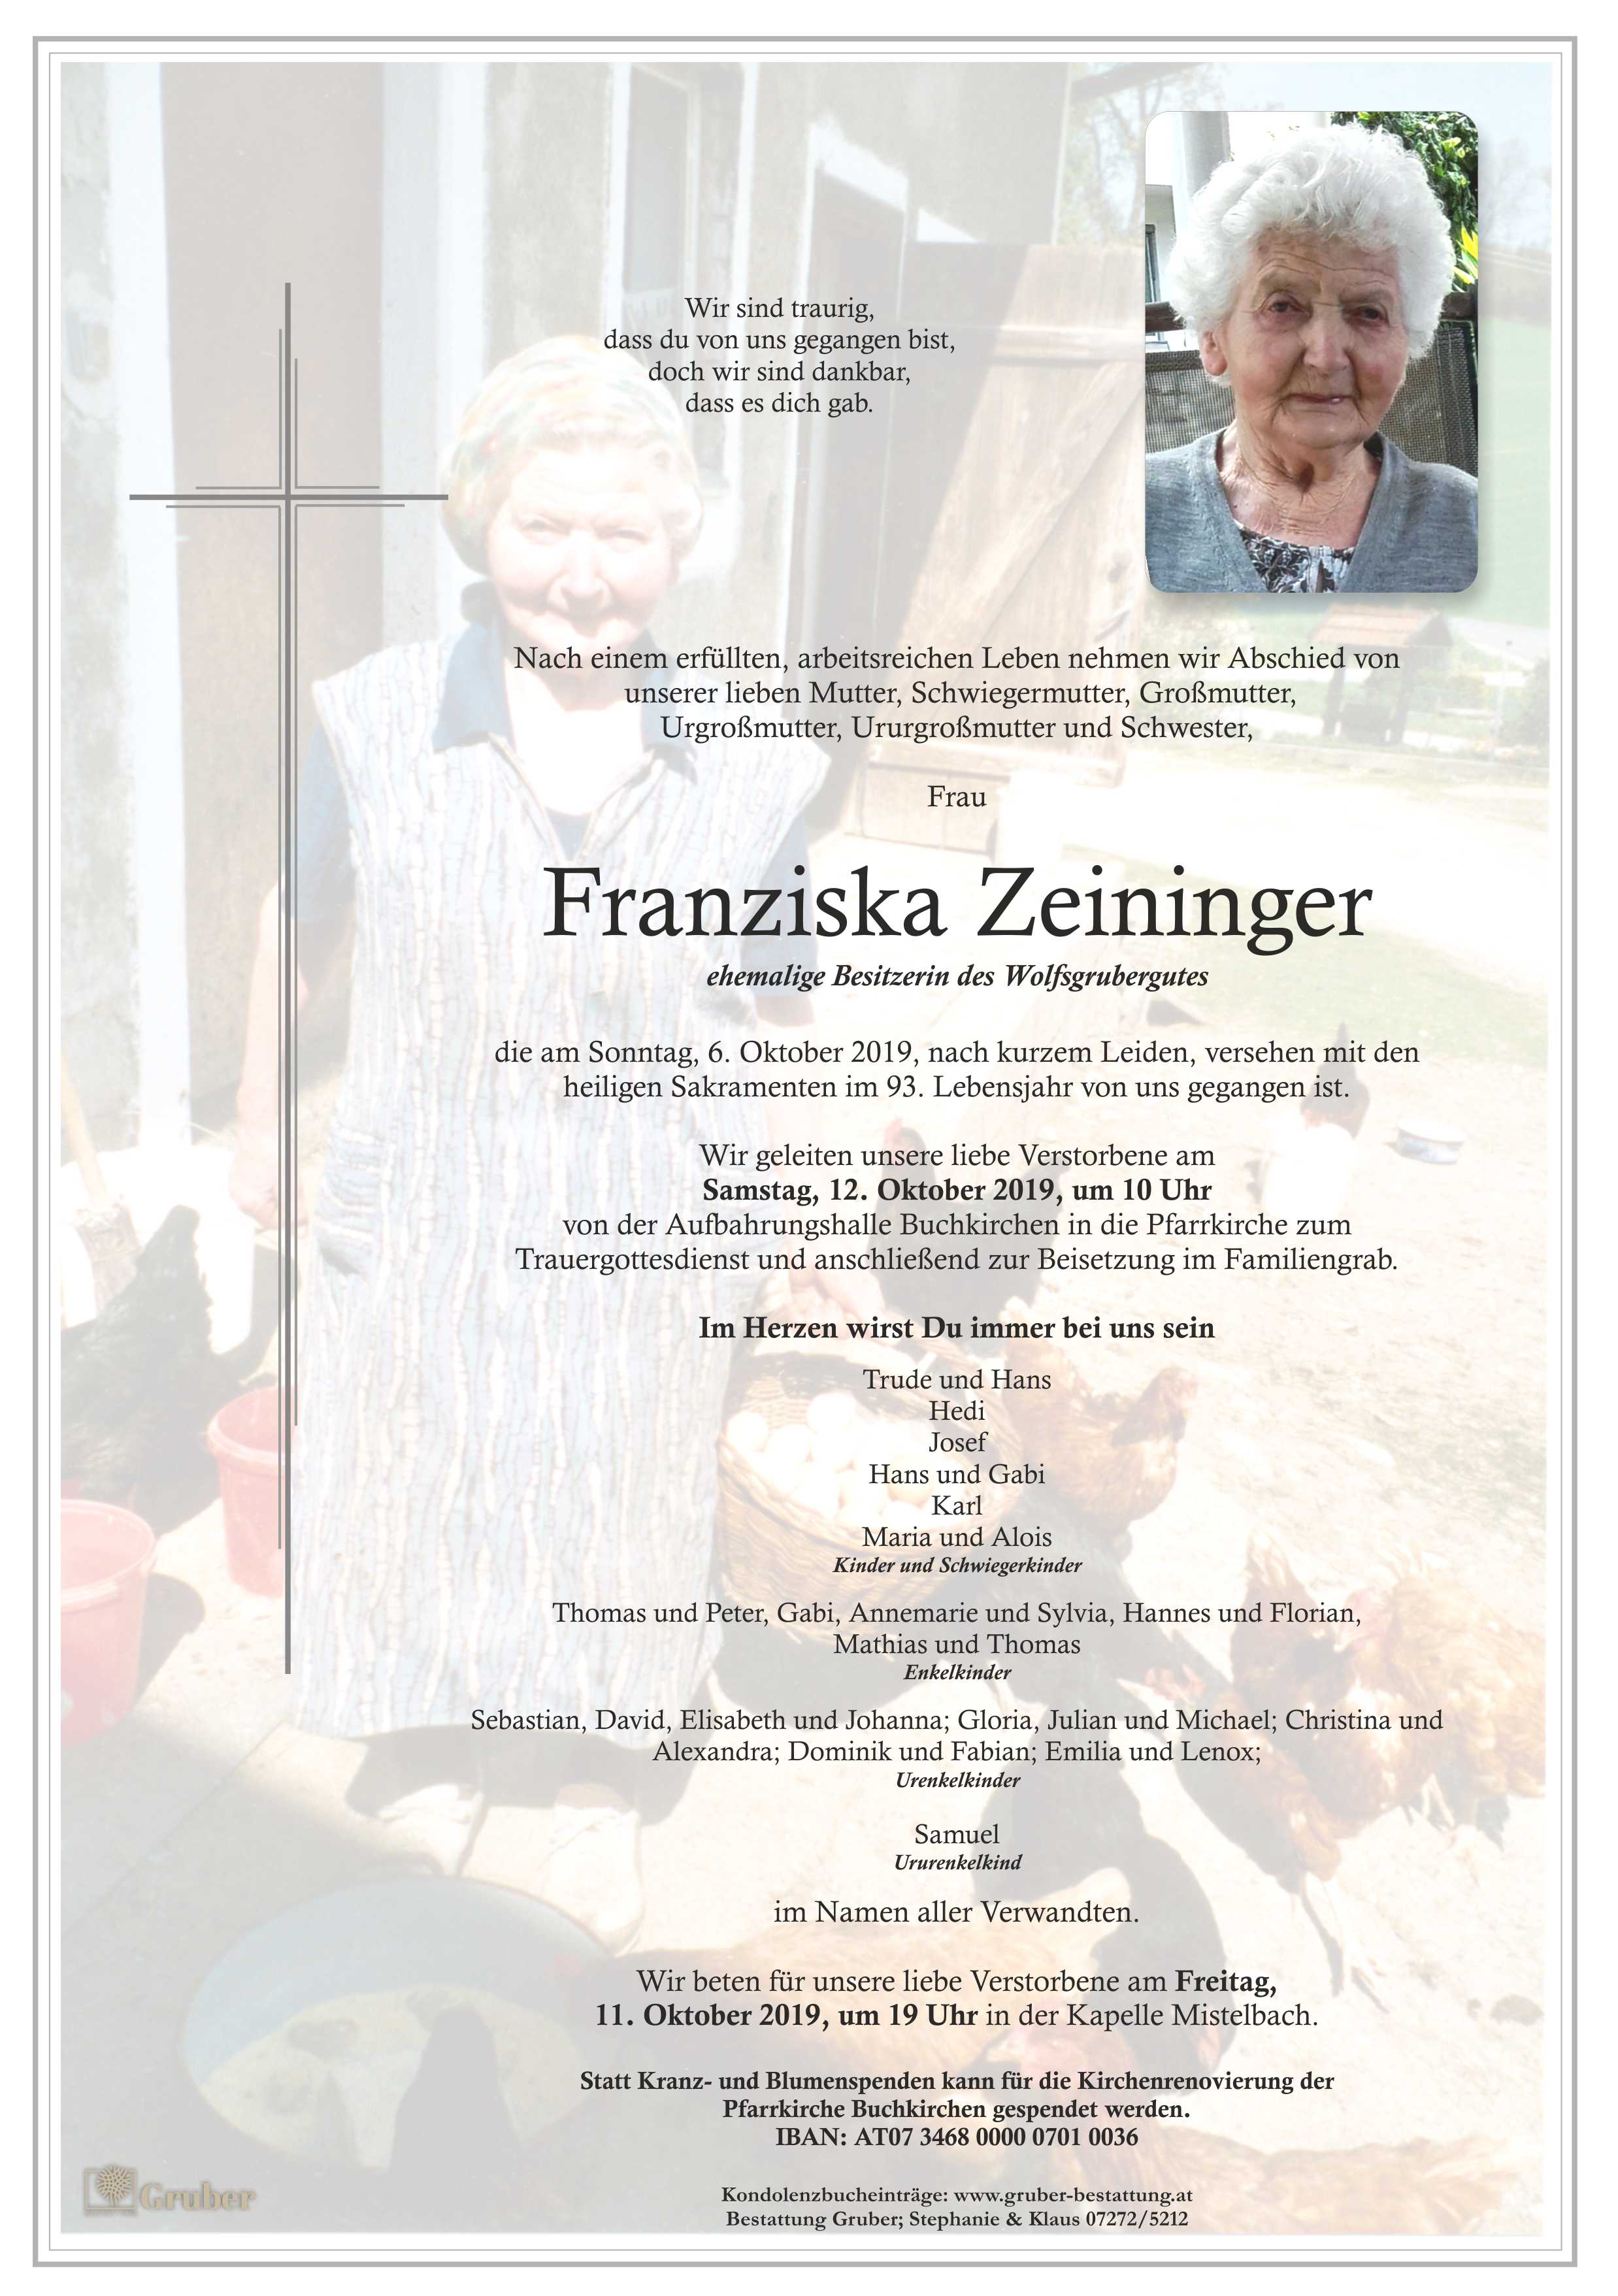 Franziska Zeininger (Buchkirchen)